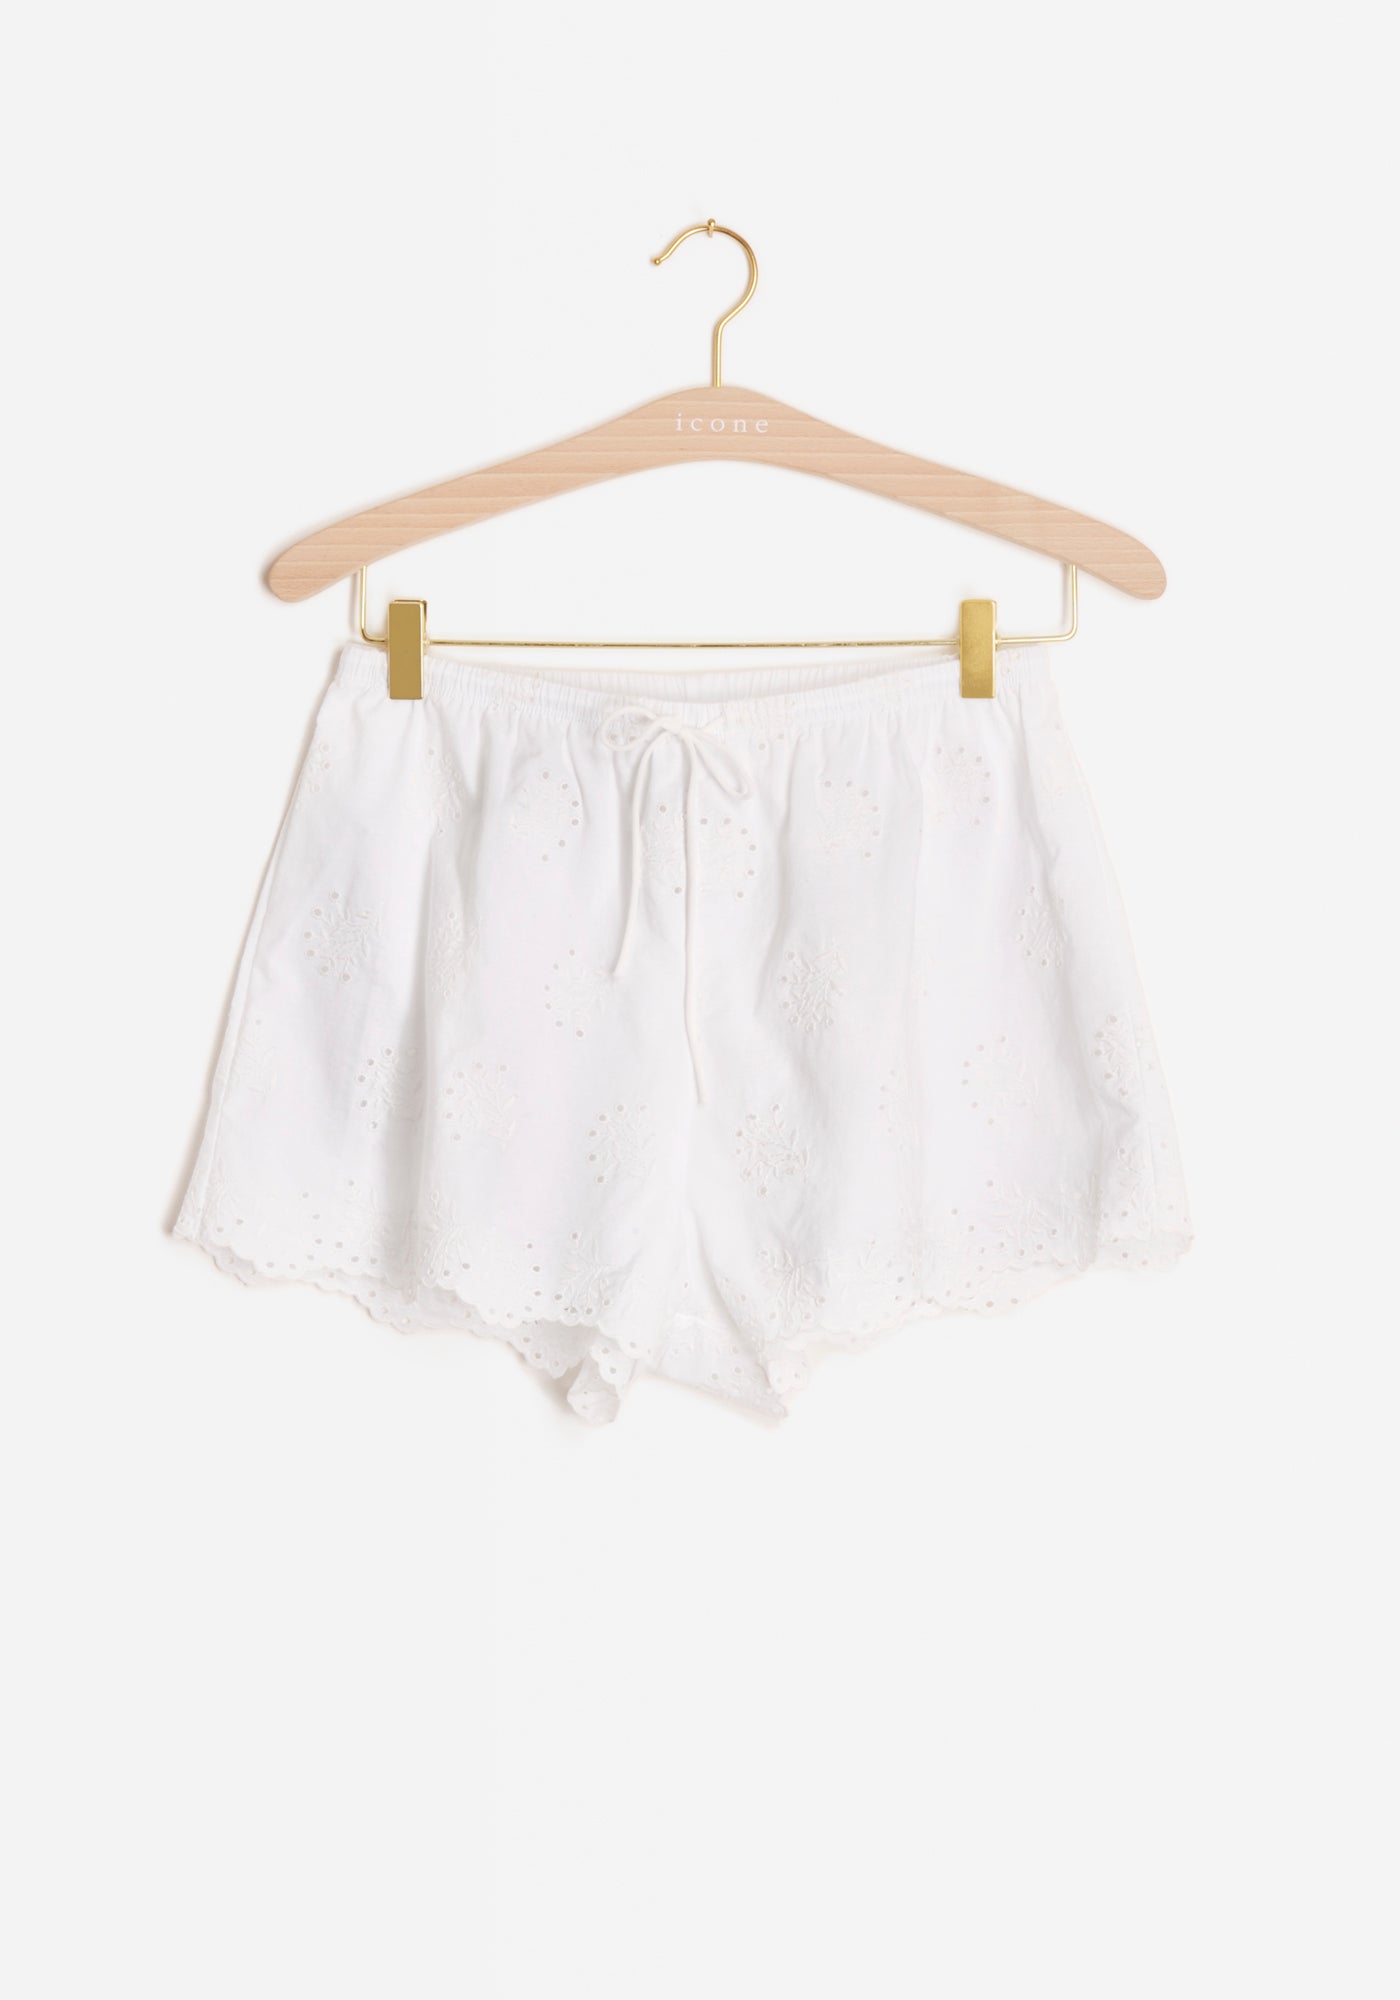 Luciana white shorts